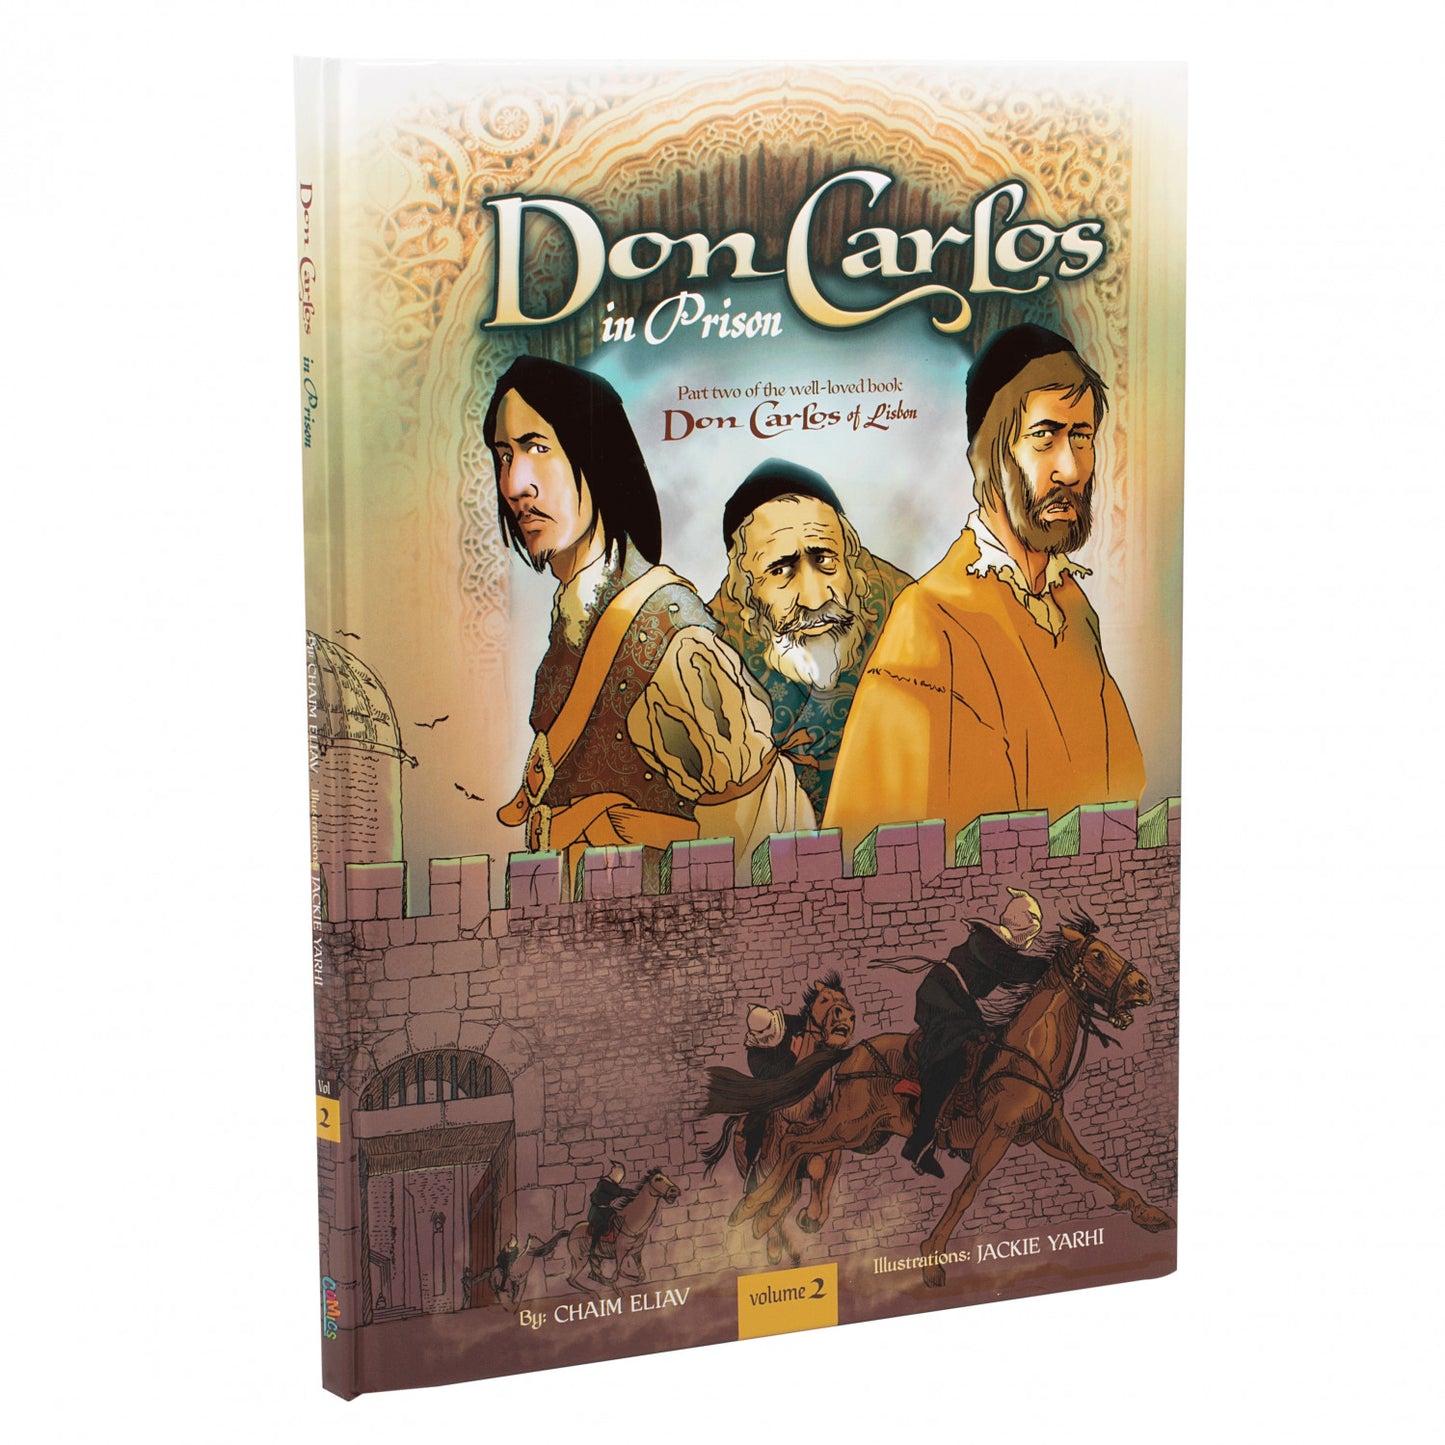 Don Carlos in Prison Vol. 2